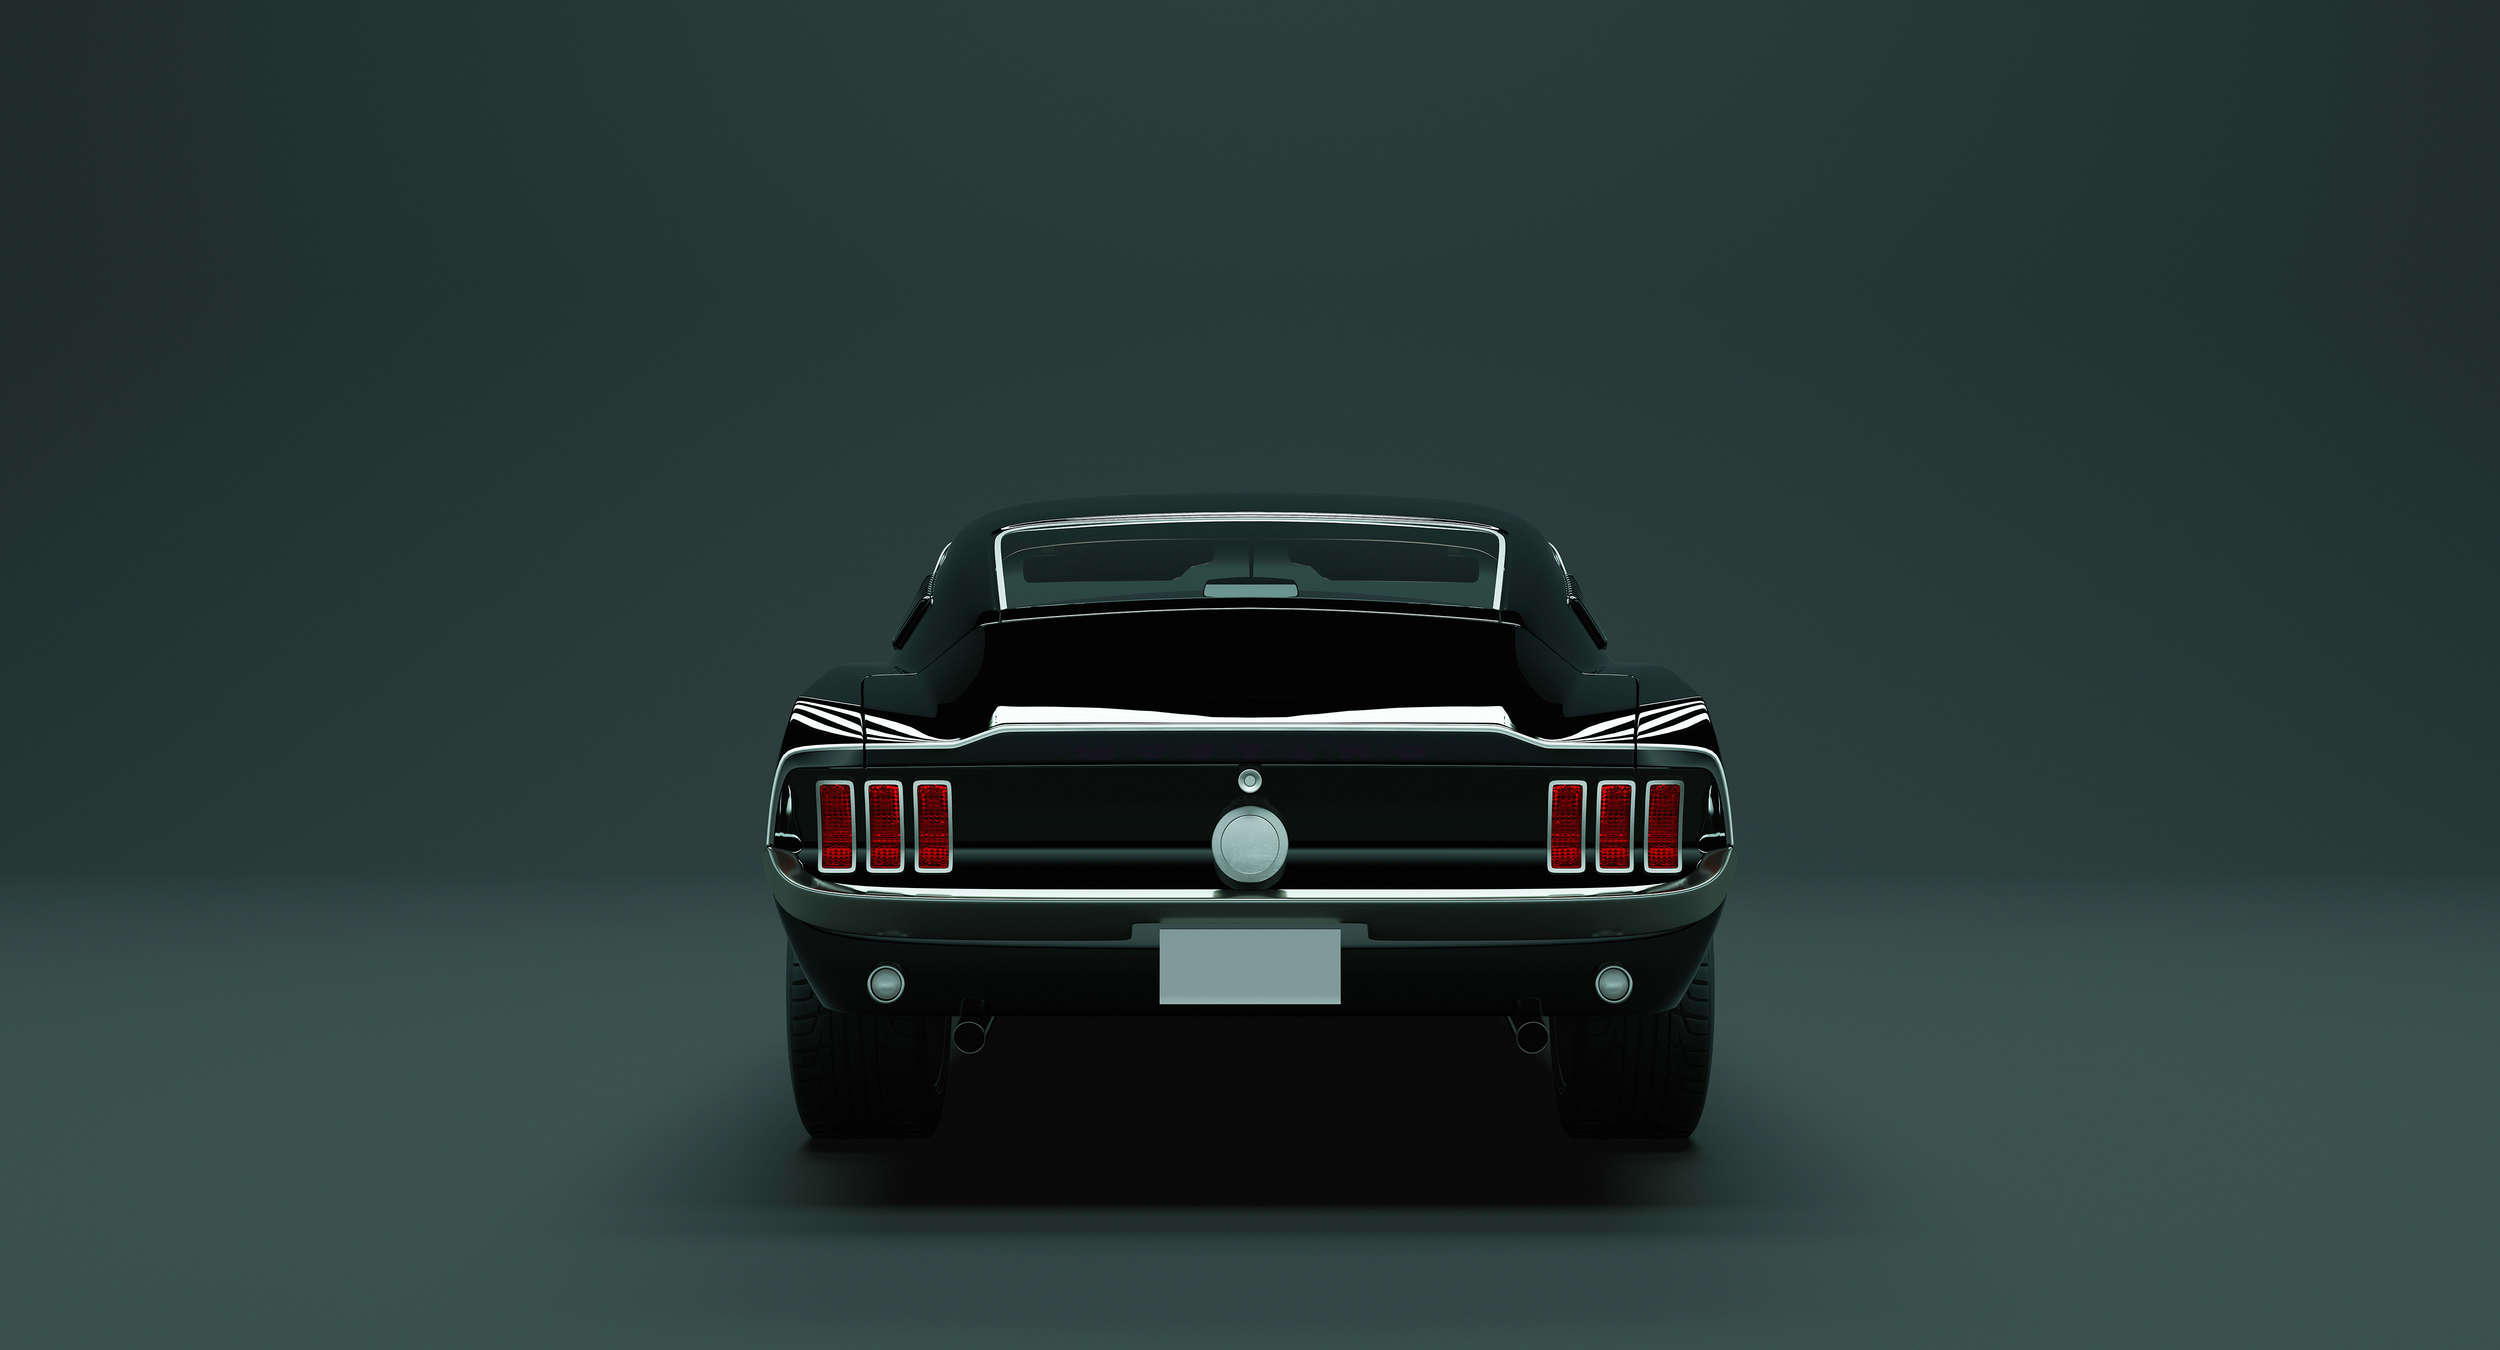             Mustang 3 - American Muscle Car Onderlaag behang - Blauw, Zwart | Textured Non-woven
        